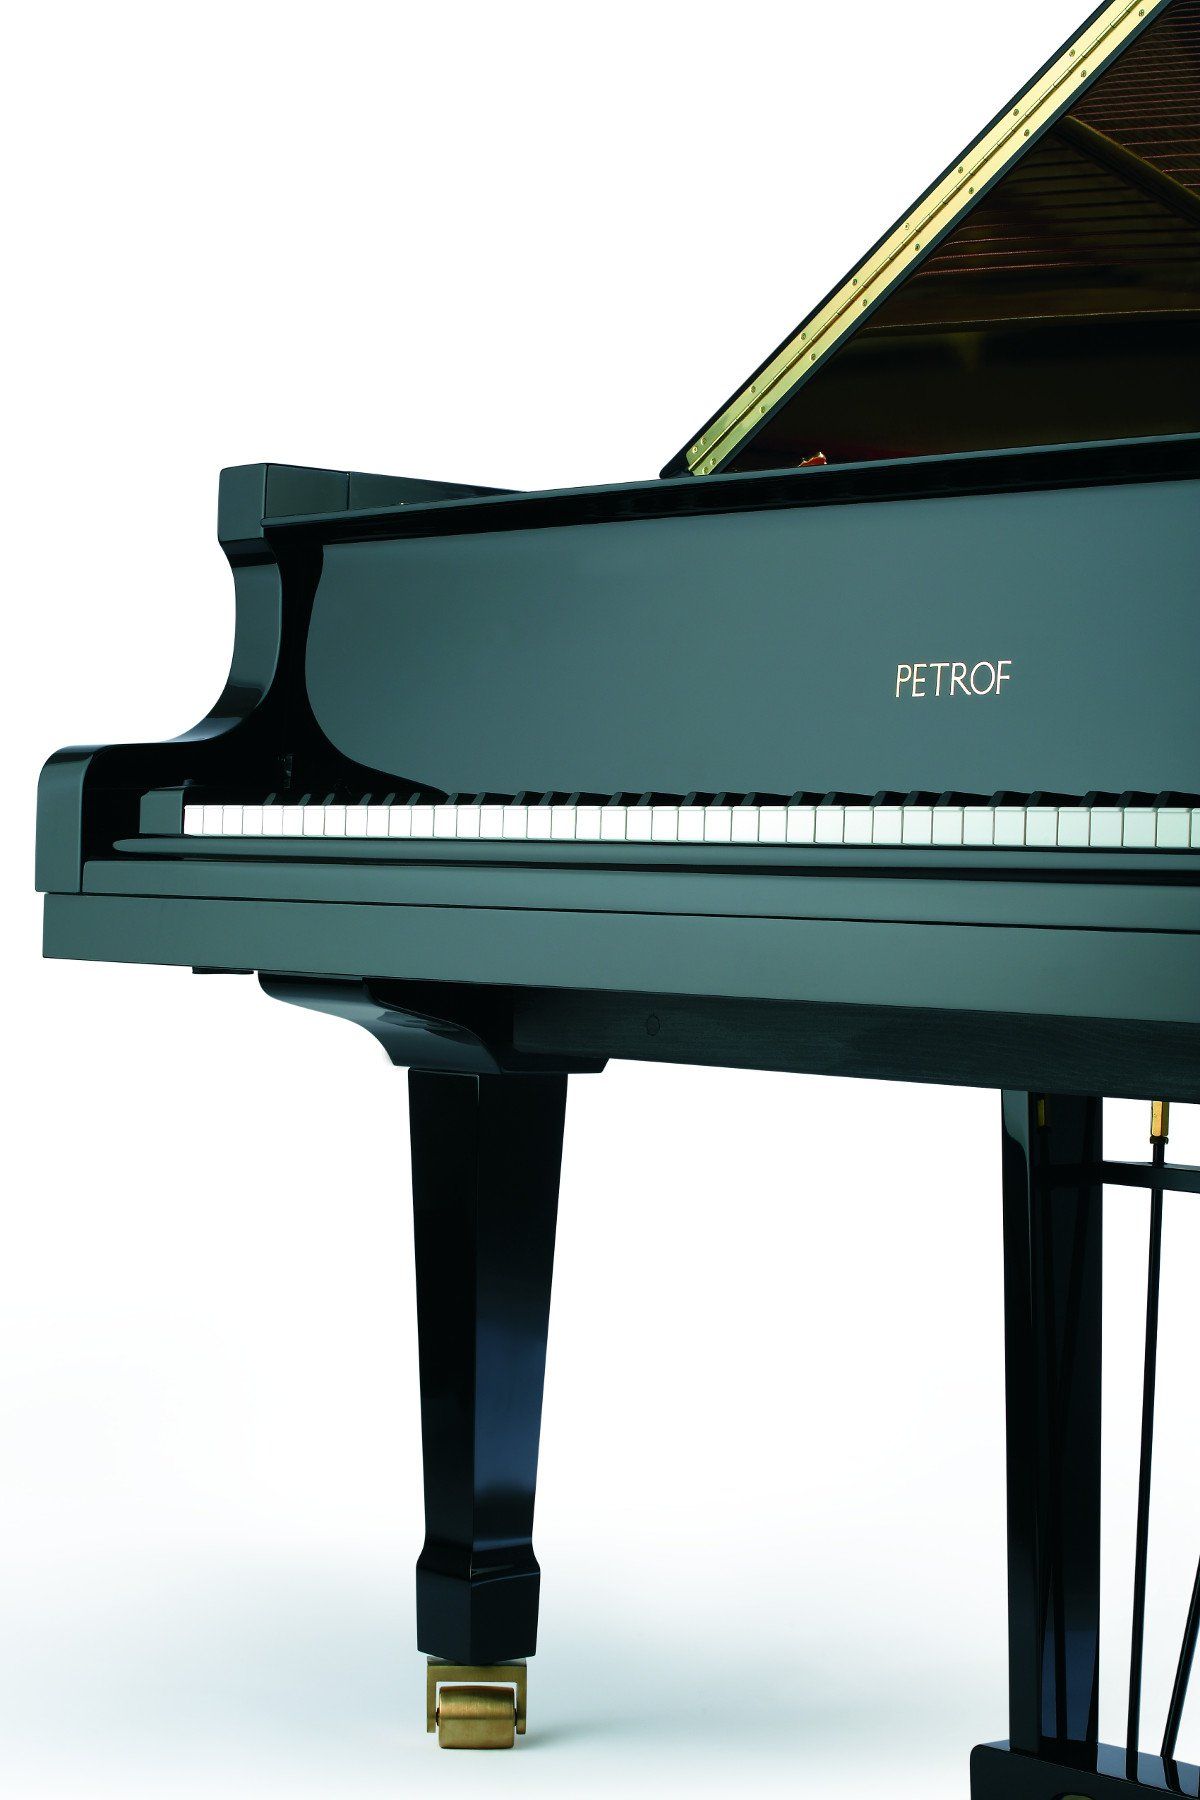  Grand Piano Petrof Master Series P210 Pasat 